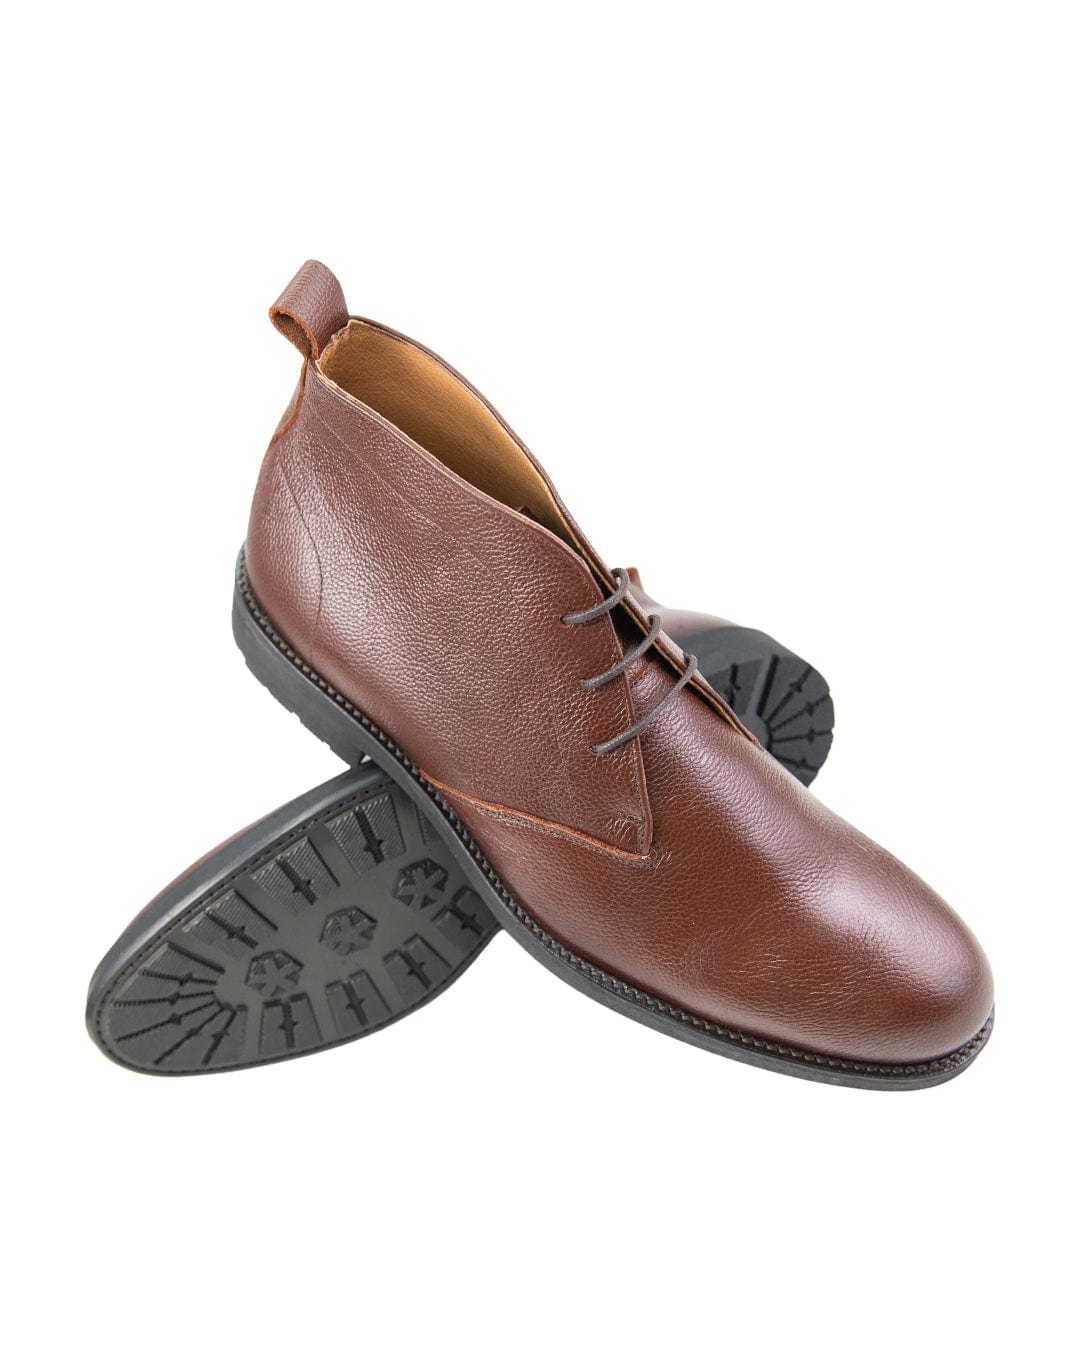 Gagliardi Shoes Gagliardi Brown Scotch Grain Leather Chukka Boots